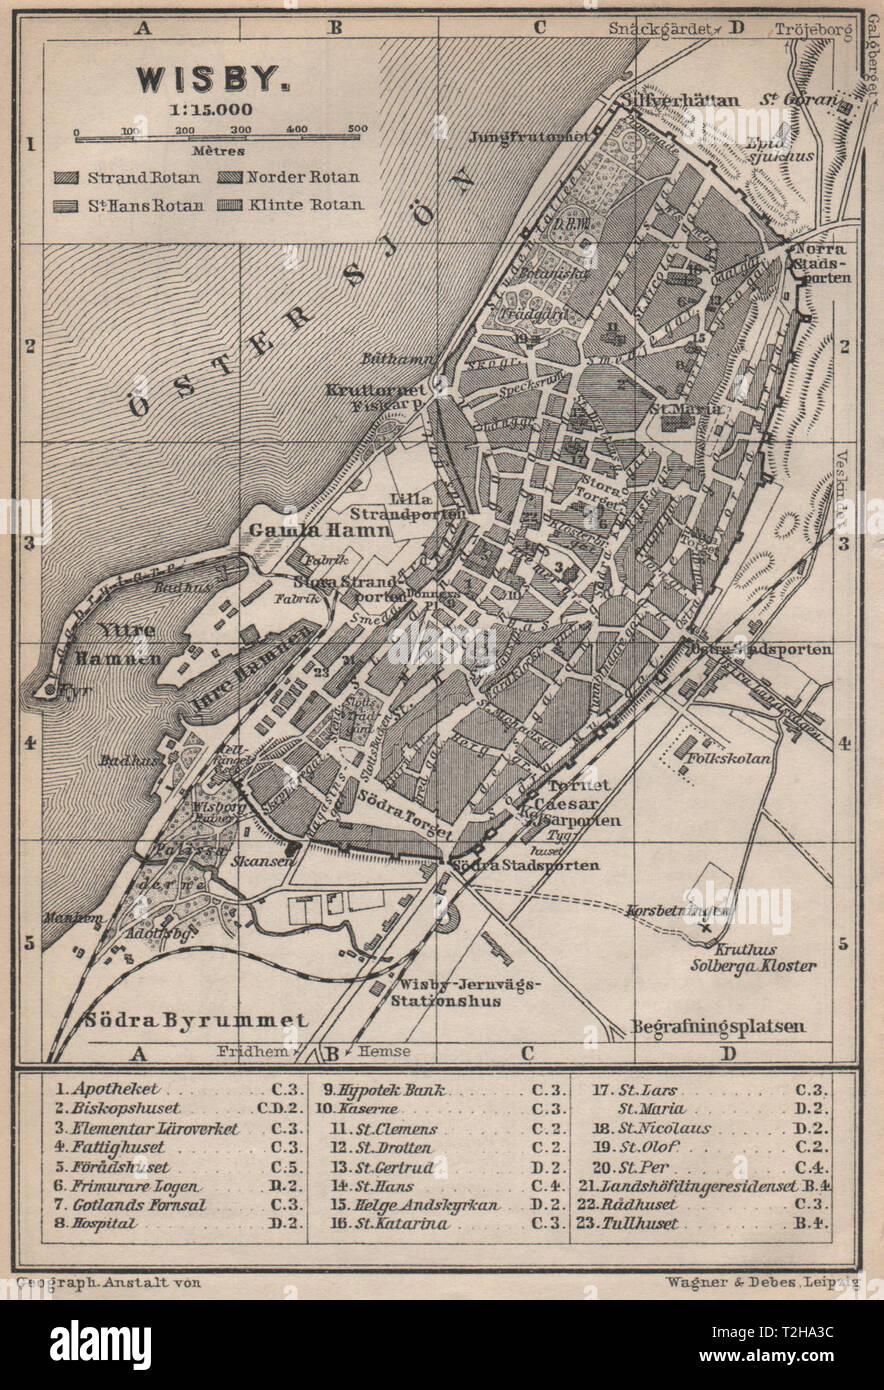 VISBY Wisby antique town city stadsplan. Sweden karta. BAEDEKER 1899 old  map Stock Photo - Alamy